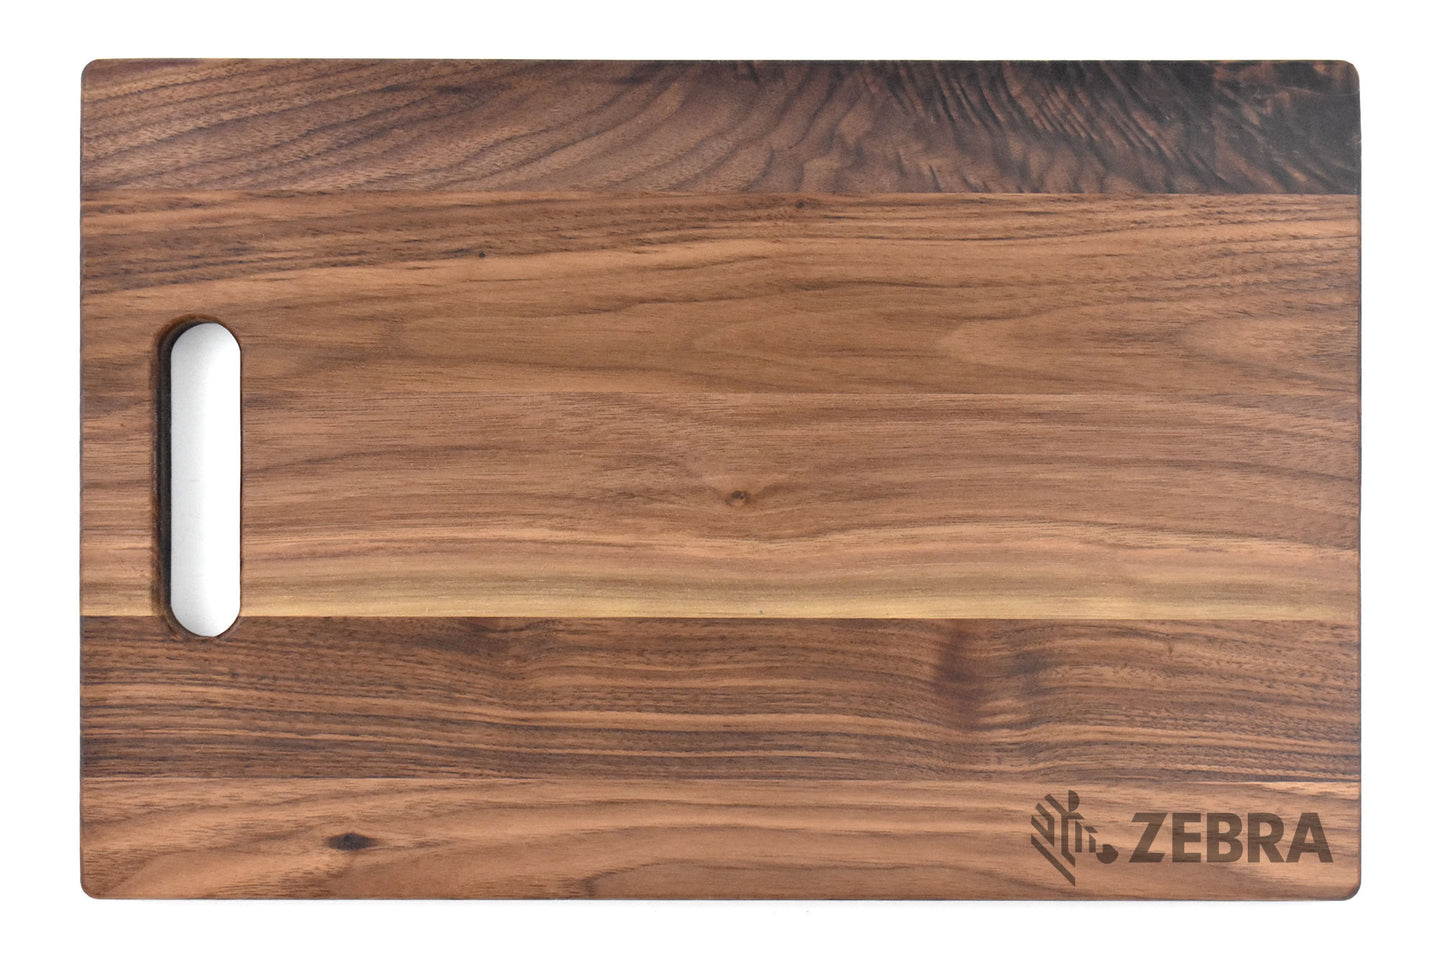 THNKS - Zebra Large Walnut Chopping Board with Cutout Handle